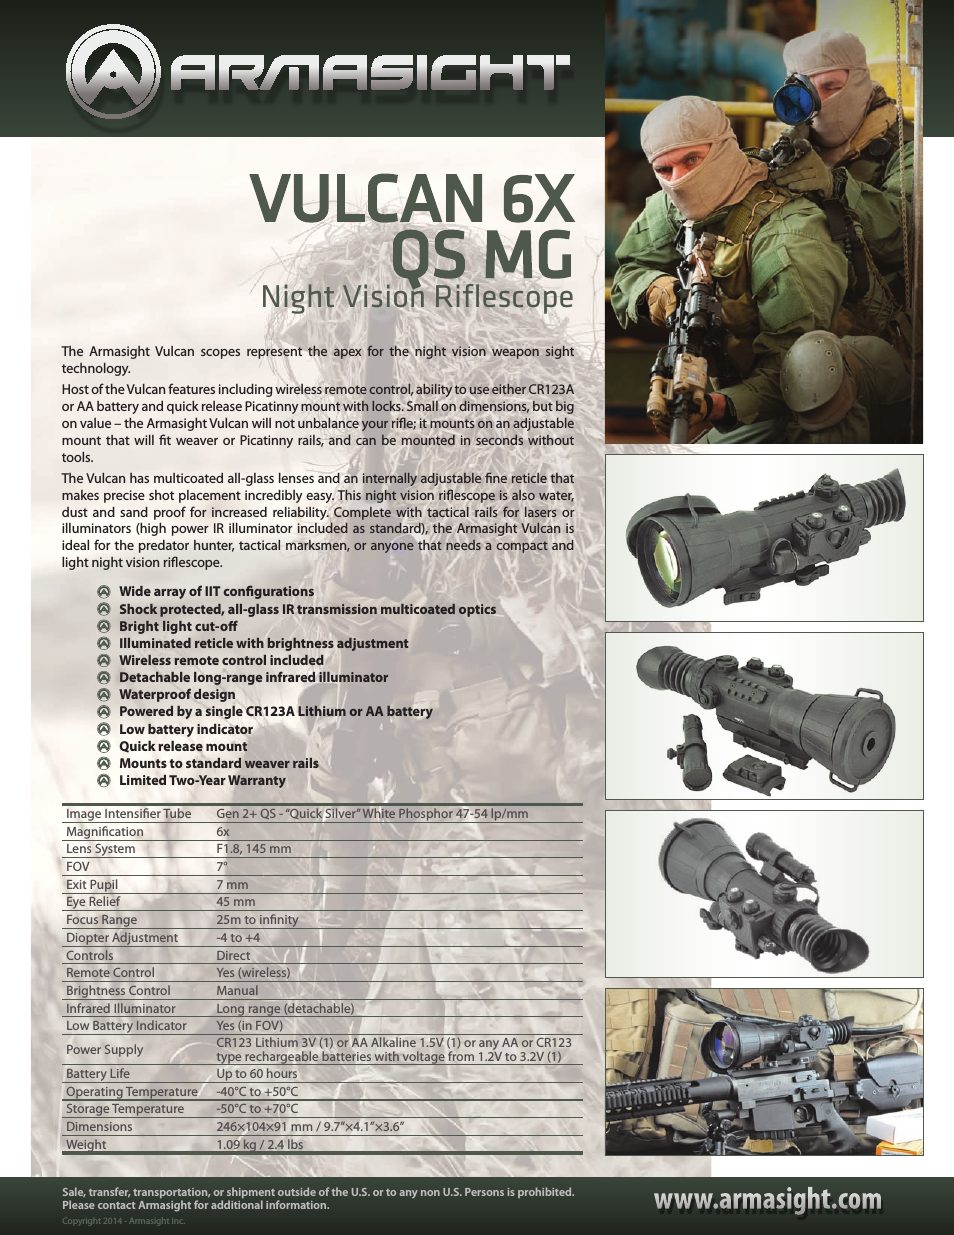 NRWVULCAN6Q9DI1 Vulcan 6x Gen 2+ QS MG Night Vision Riflescope